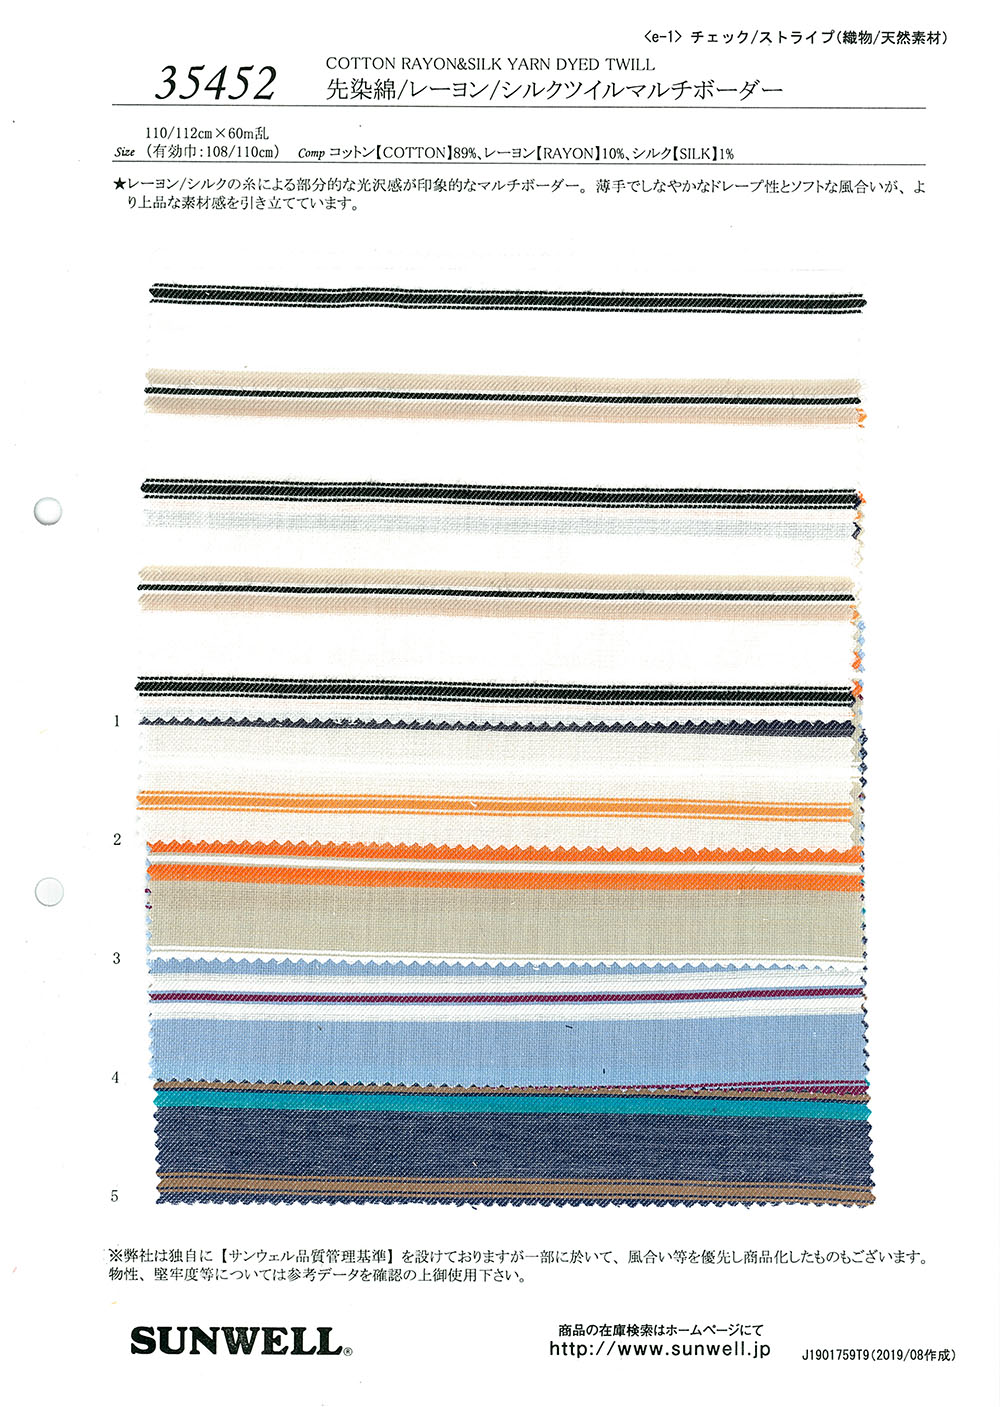 35452 Rayas Multihorizontales De Sarga De Algodón/rayón/seda Teñidas En Hilo[Fabrica Textil] SUNWELL